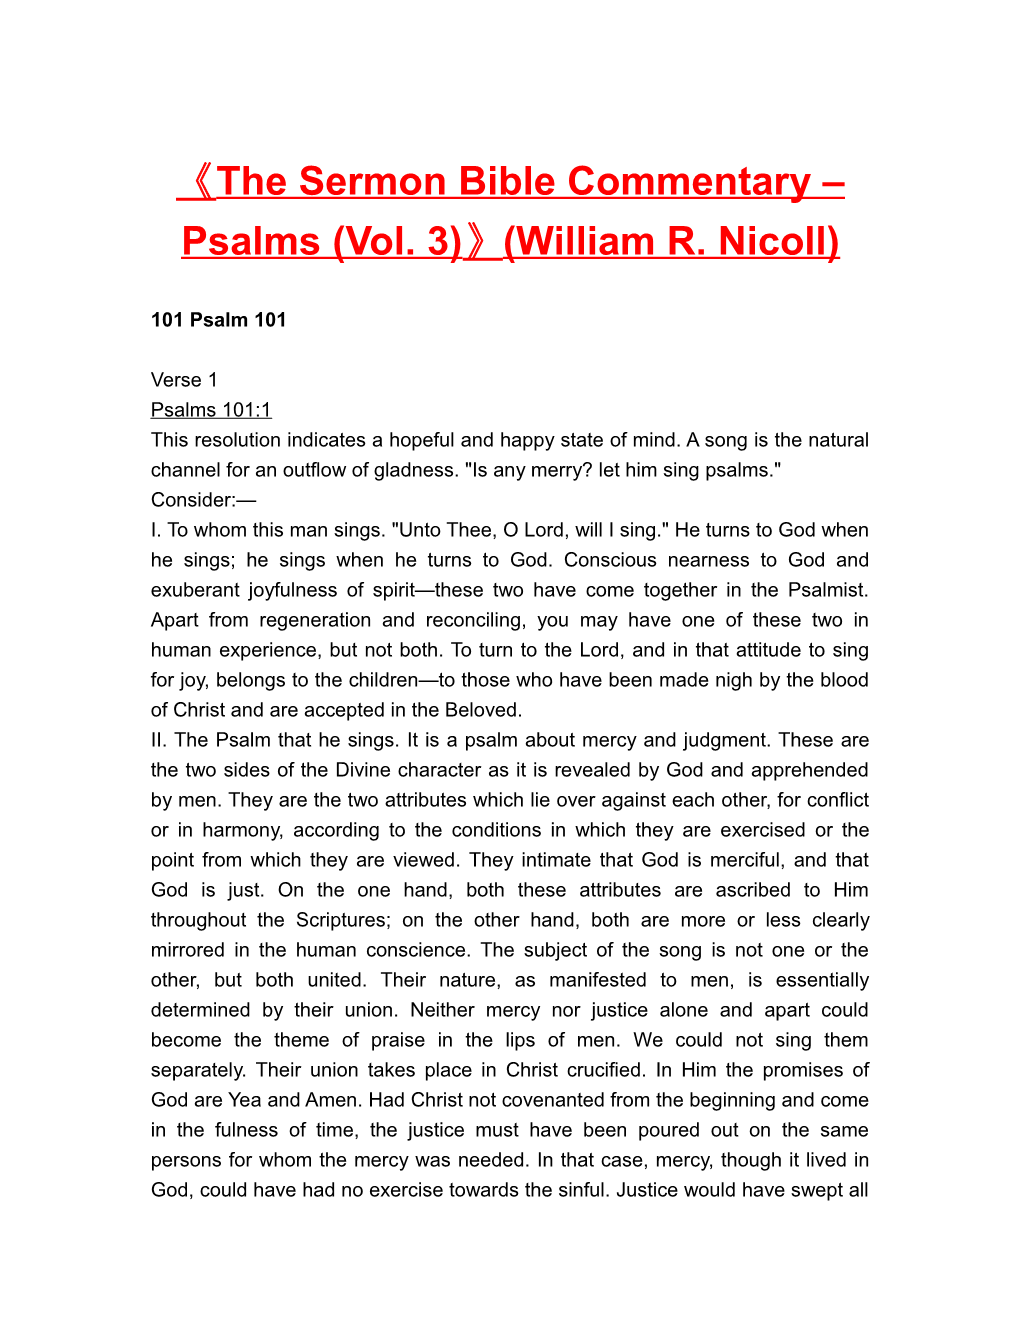 The Sermon Bible Commentary Psalms (Vol. 3) (William R. Nicoll)